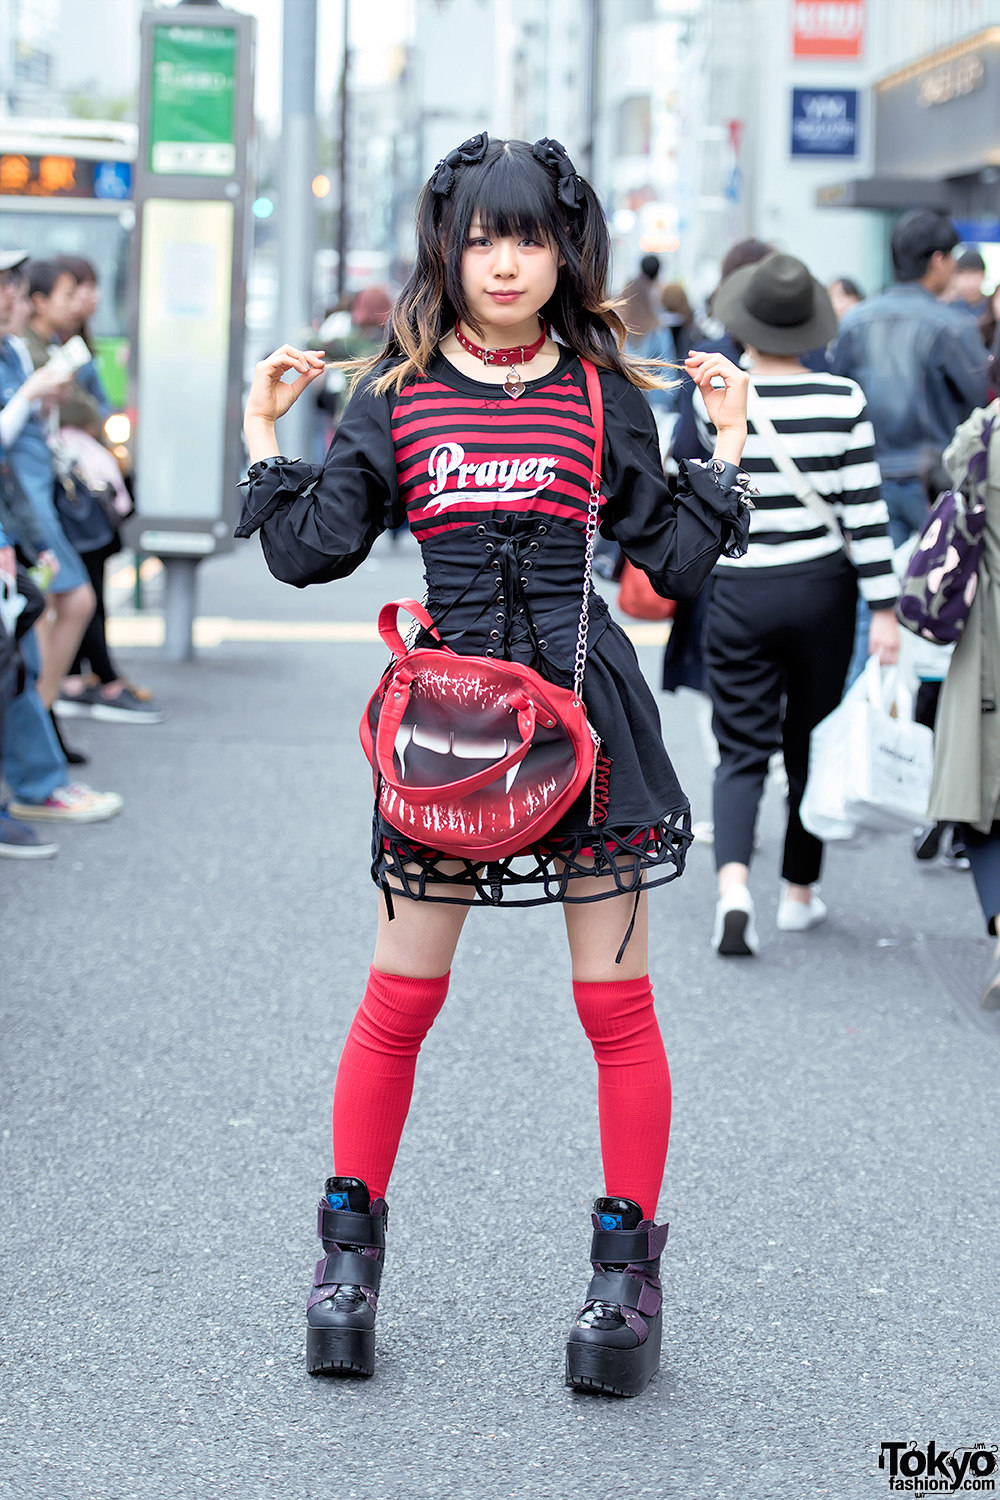 Kawaii Harajuku Fashion Pastel Goth Cute Aesthetic Soft Japanese Style  Anime Injured Girl T-Shirt